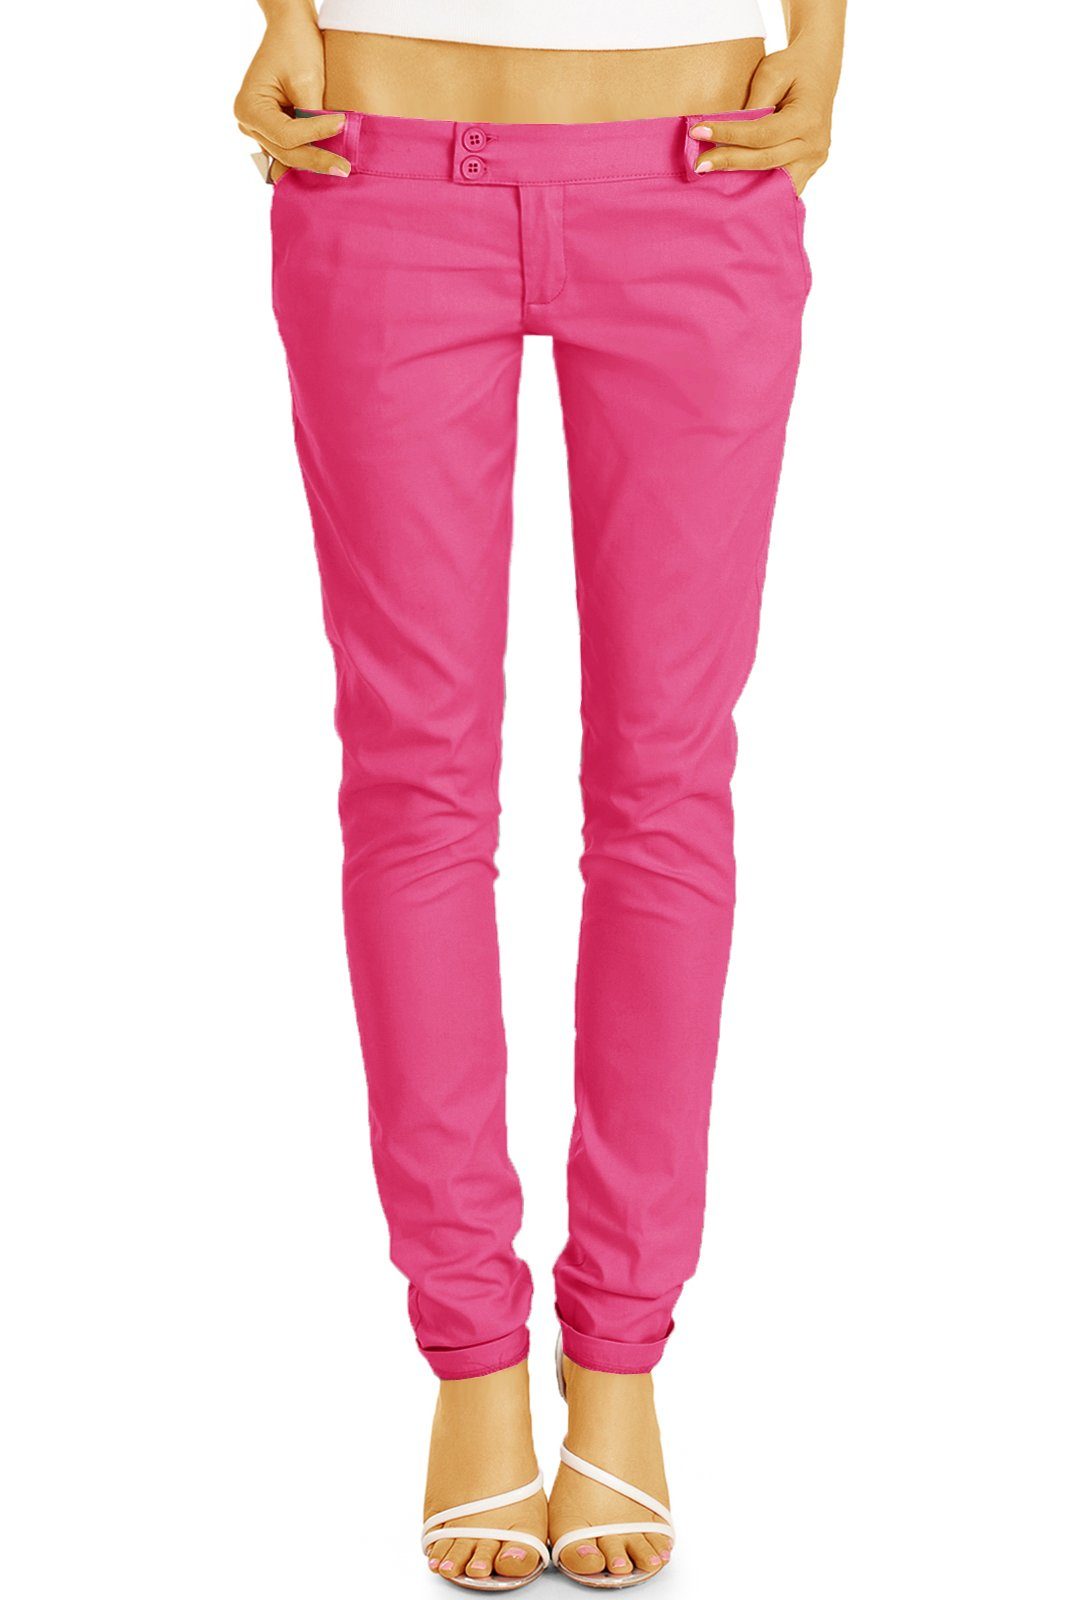 be styled Stoffhose röhrige Damenhosen, slim fit Hüfthosen elegant / sportlich h15a pink